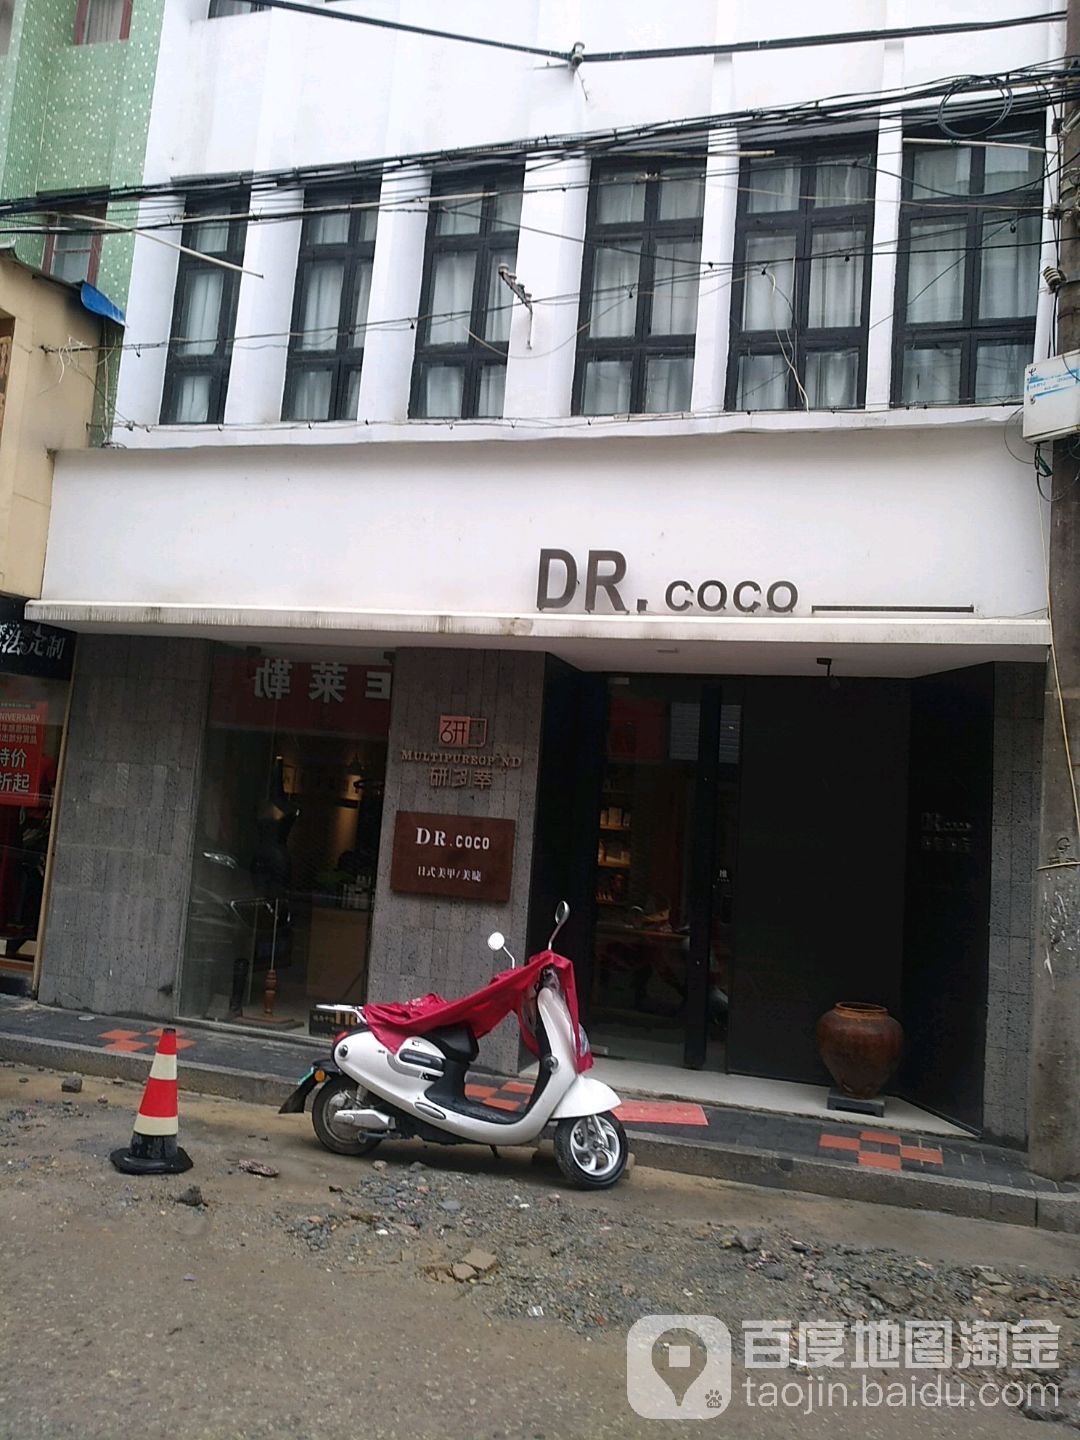 DR COCO